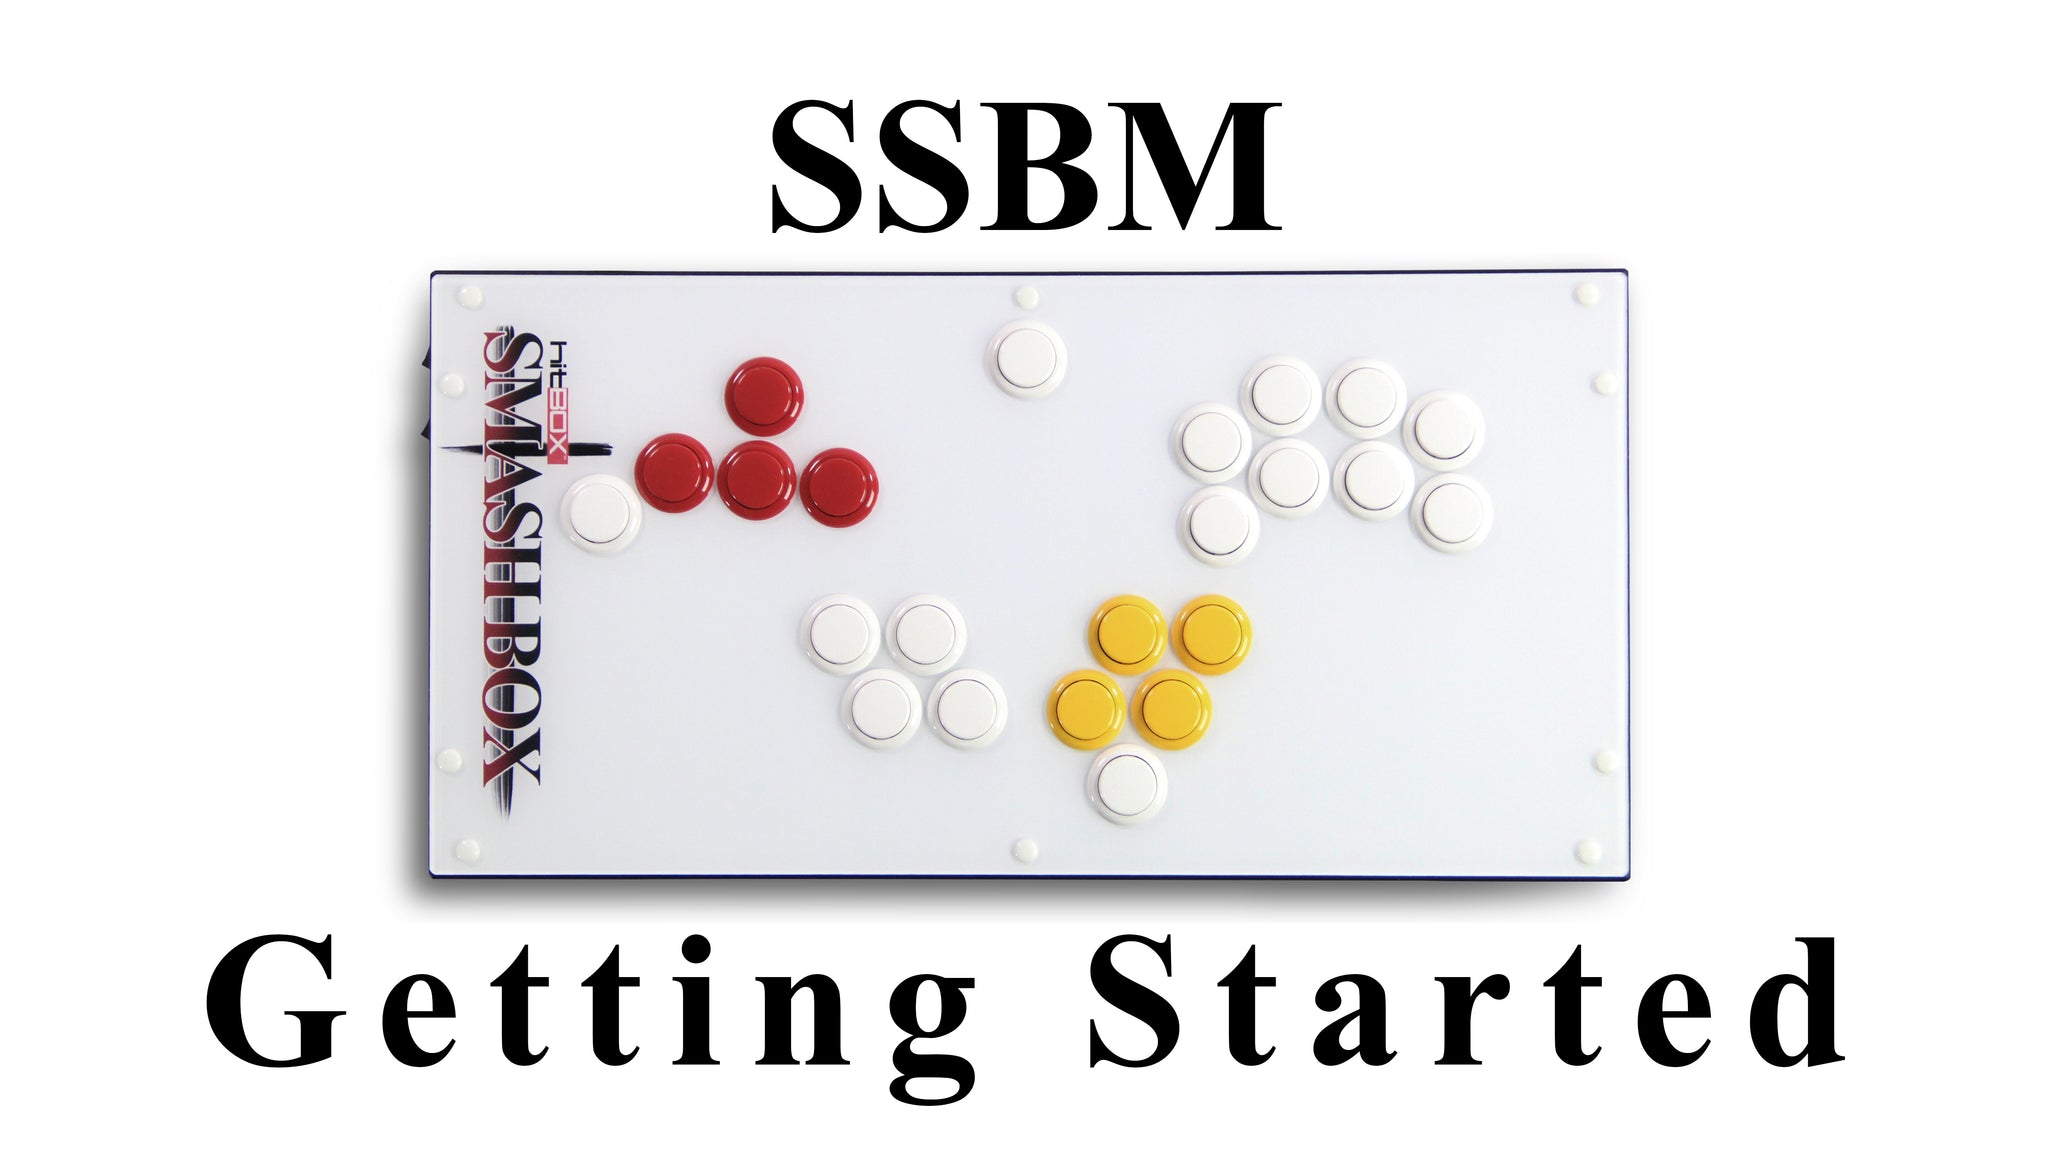 SSBM on Smash Box - Getting Started